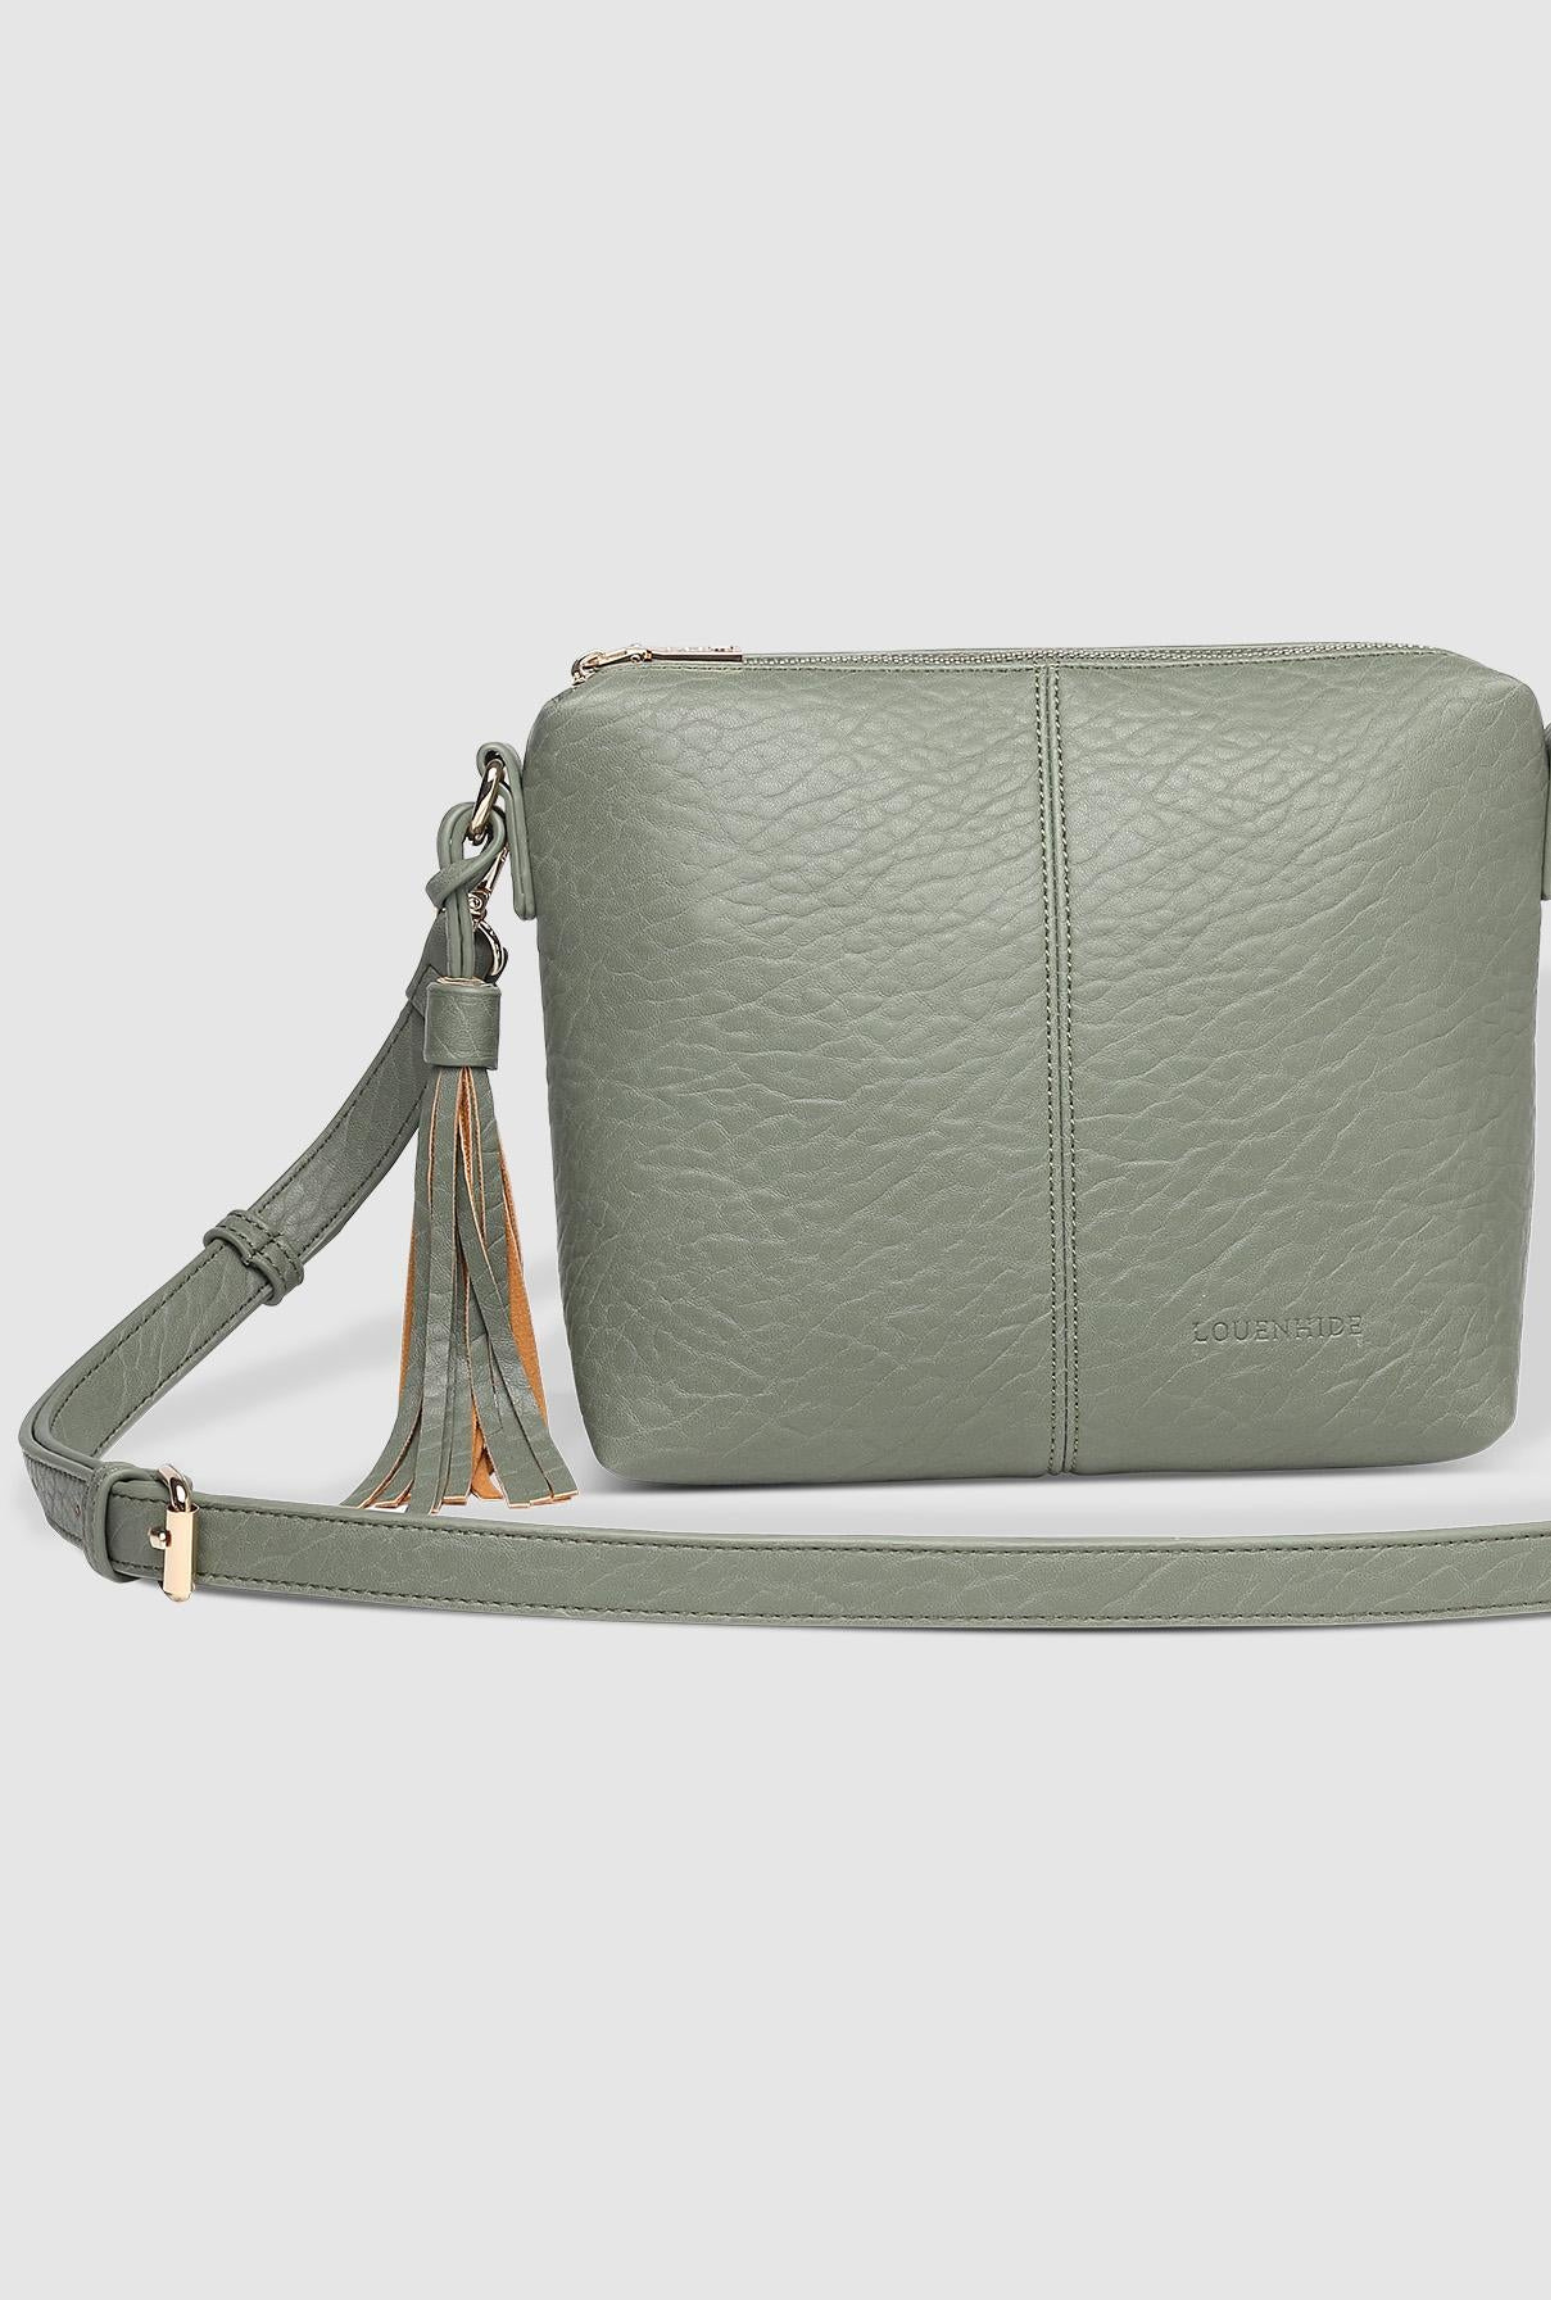 Louenhide Kasey Textured Bag  - Light Khaki